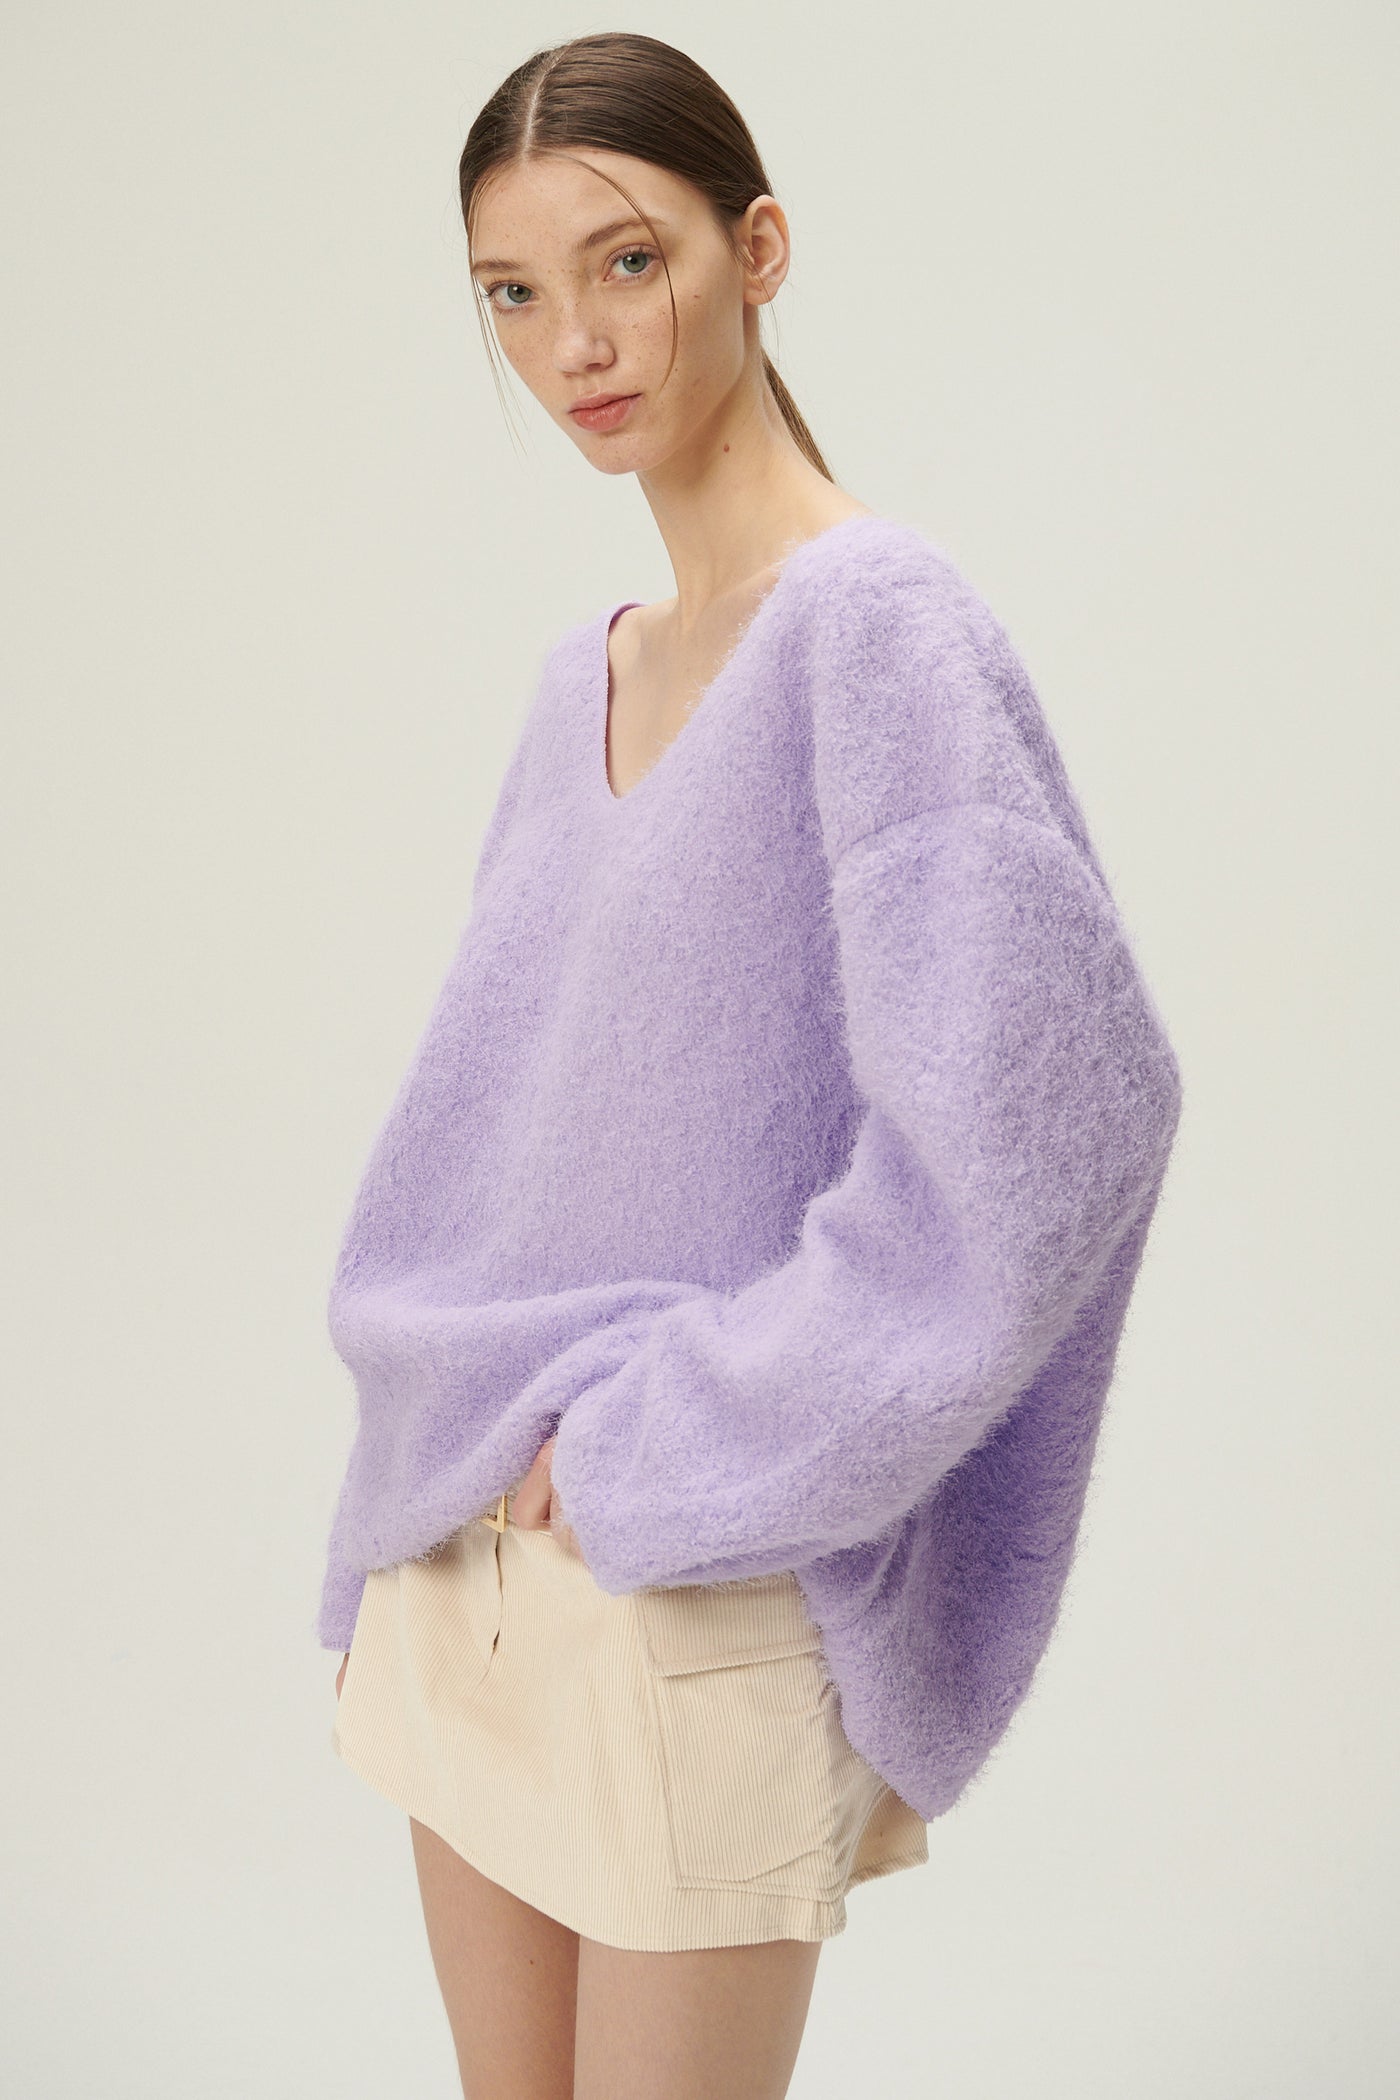 storets.com Rosanna Fuzzy Sweater / Dress